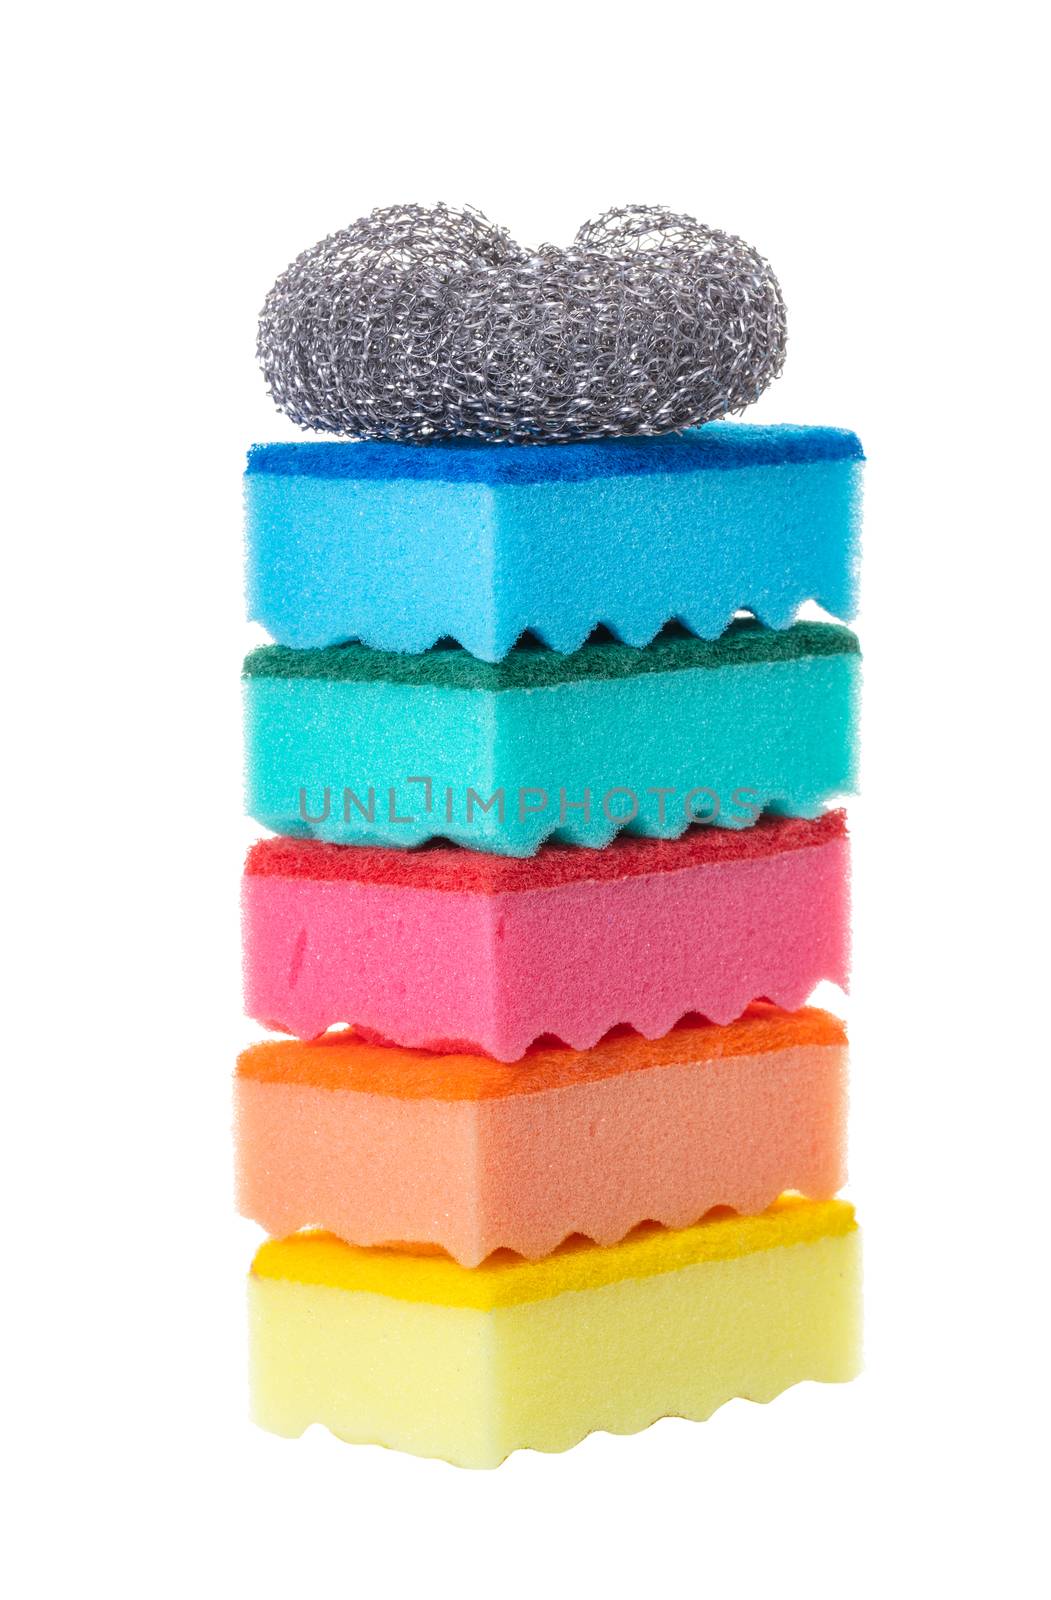 sponges for washing utensils  by MegaArt